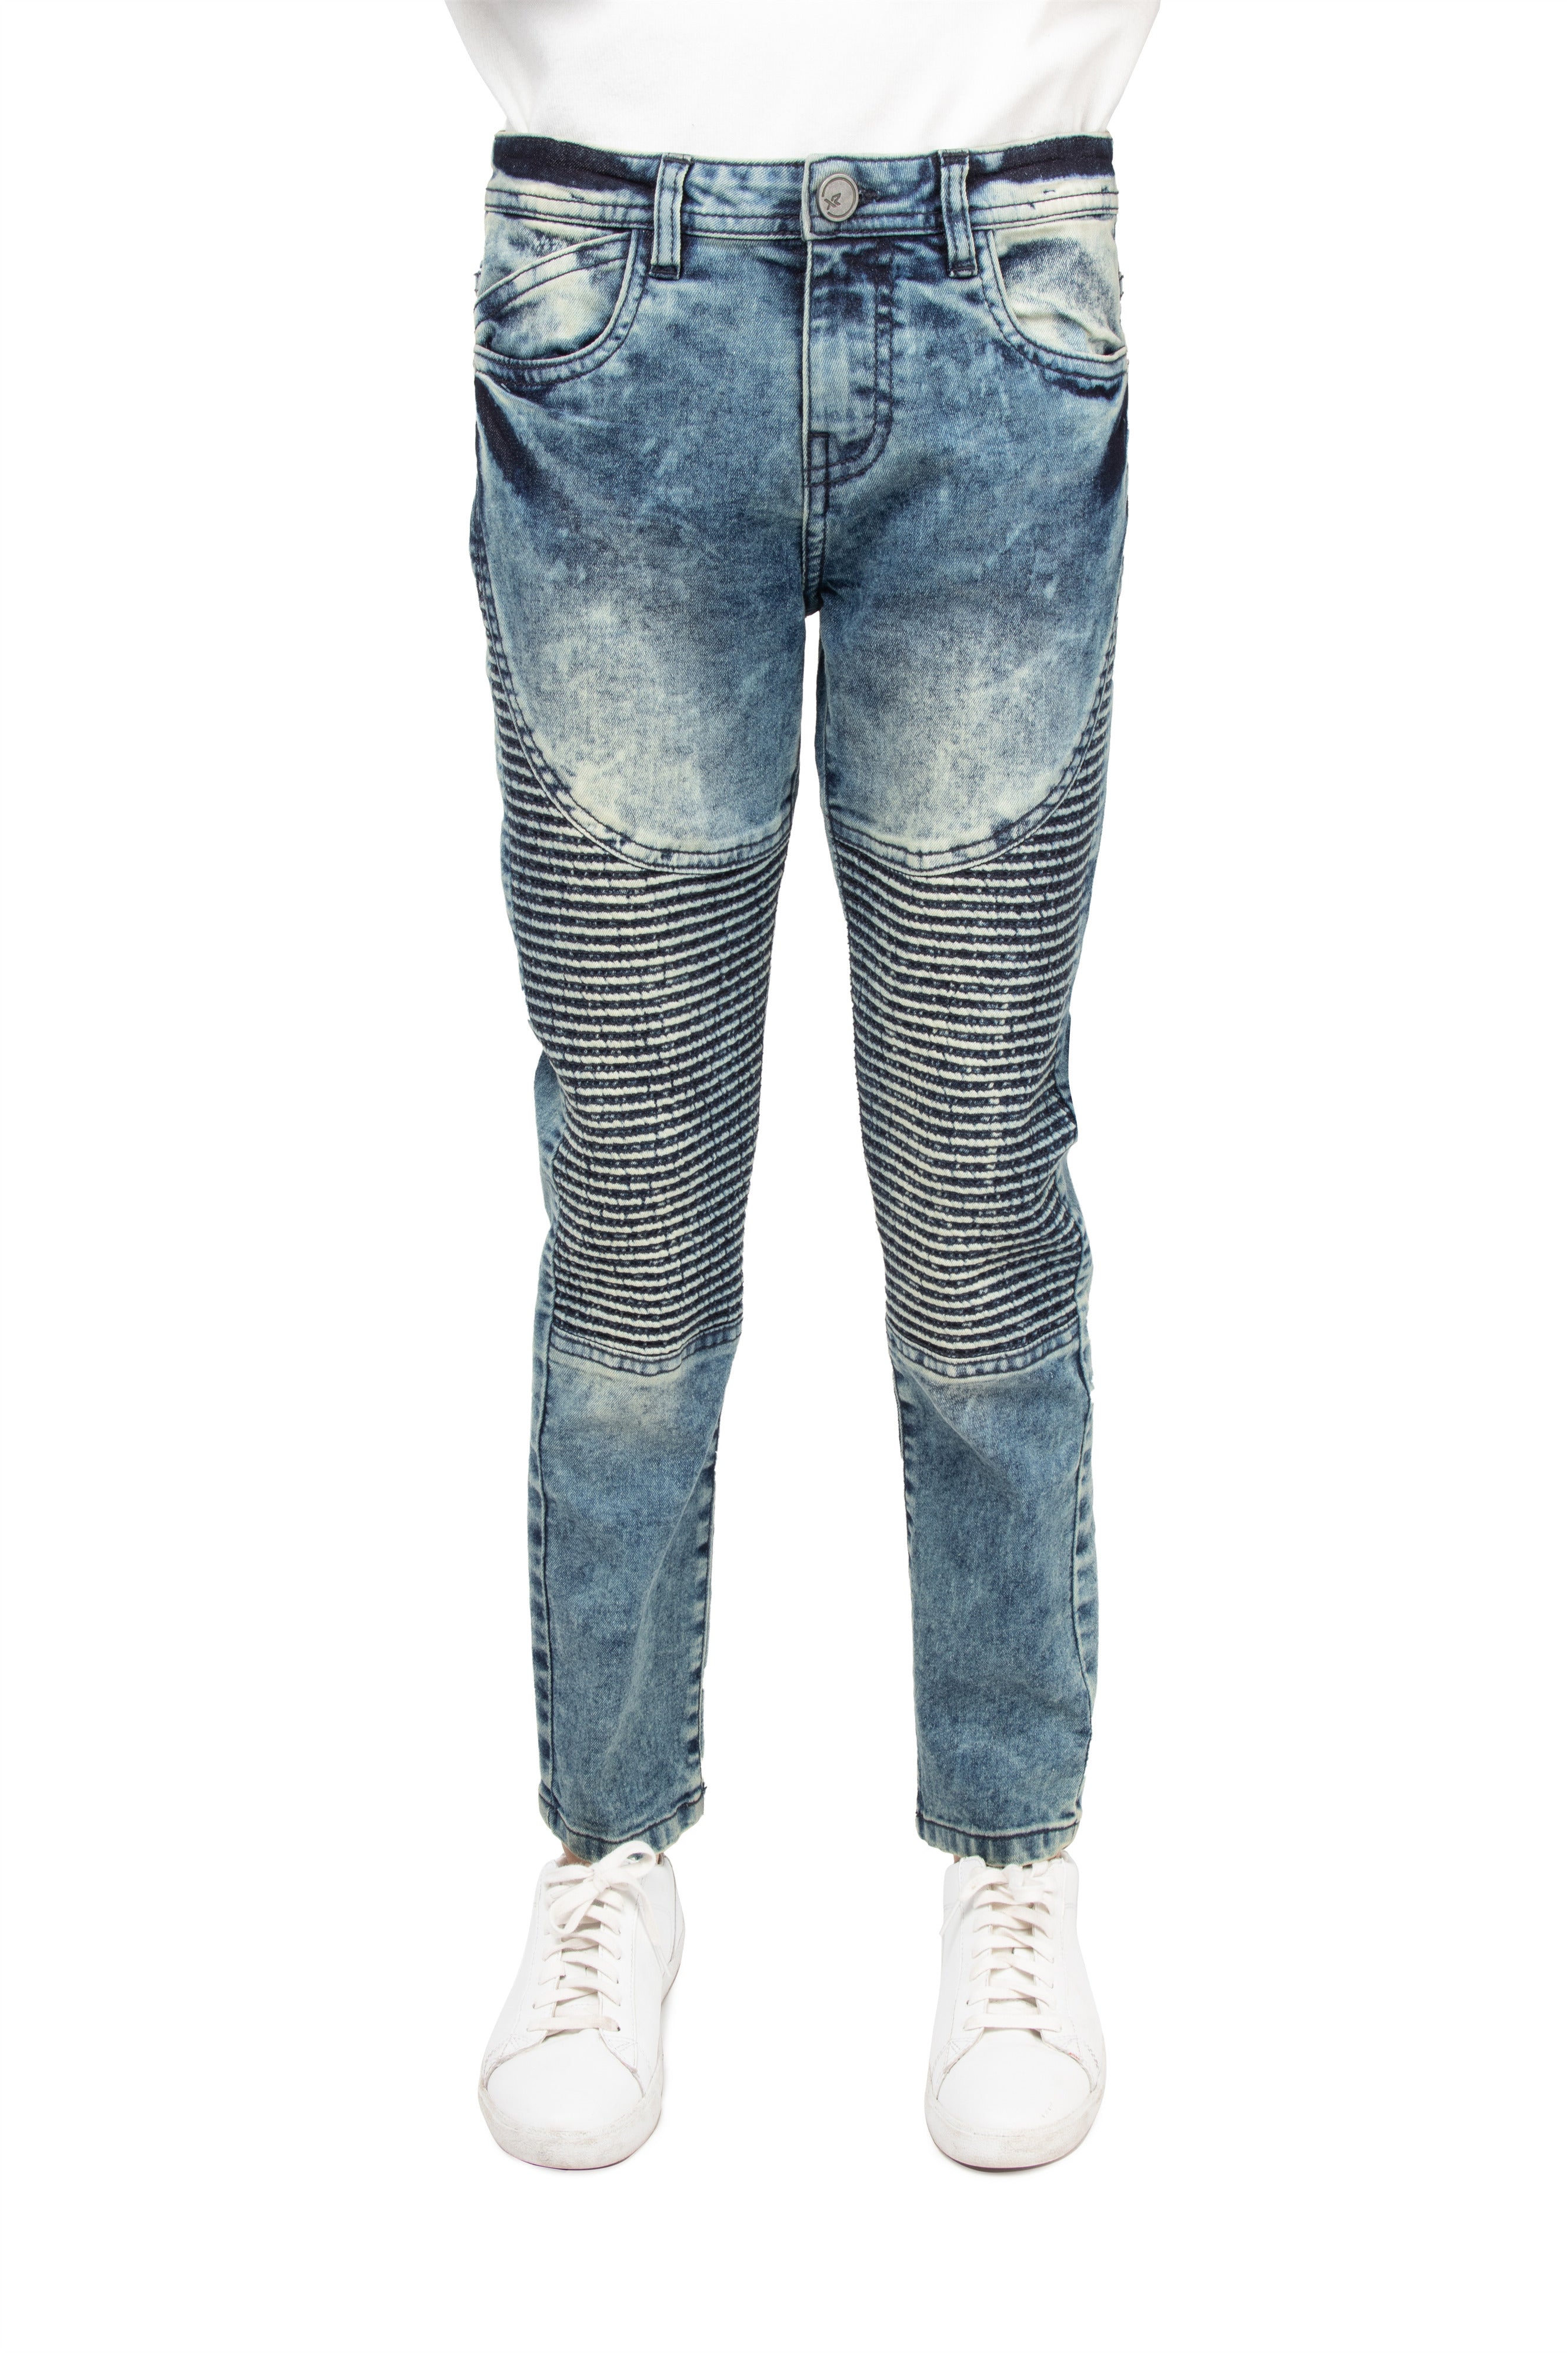 X RAY Slim Fit Biker Pants for Boys Big Boys Teen – Distressed Skinny Moto  Jeans, Dark Stone Size 14